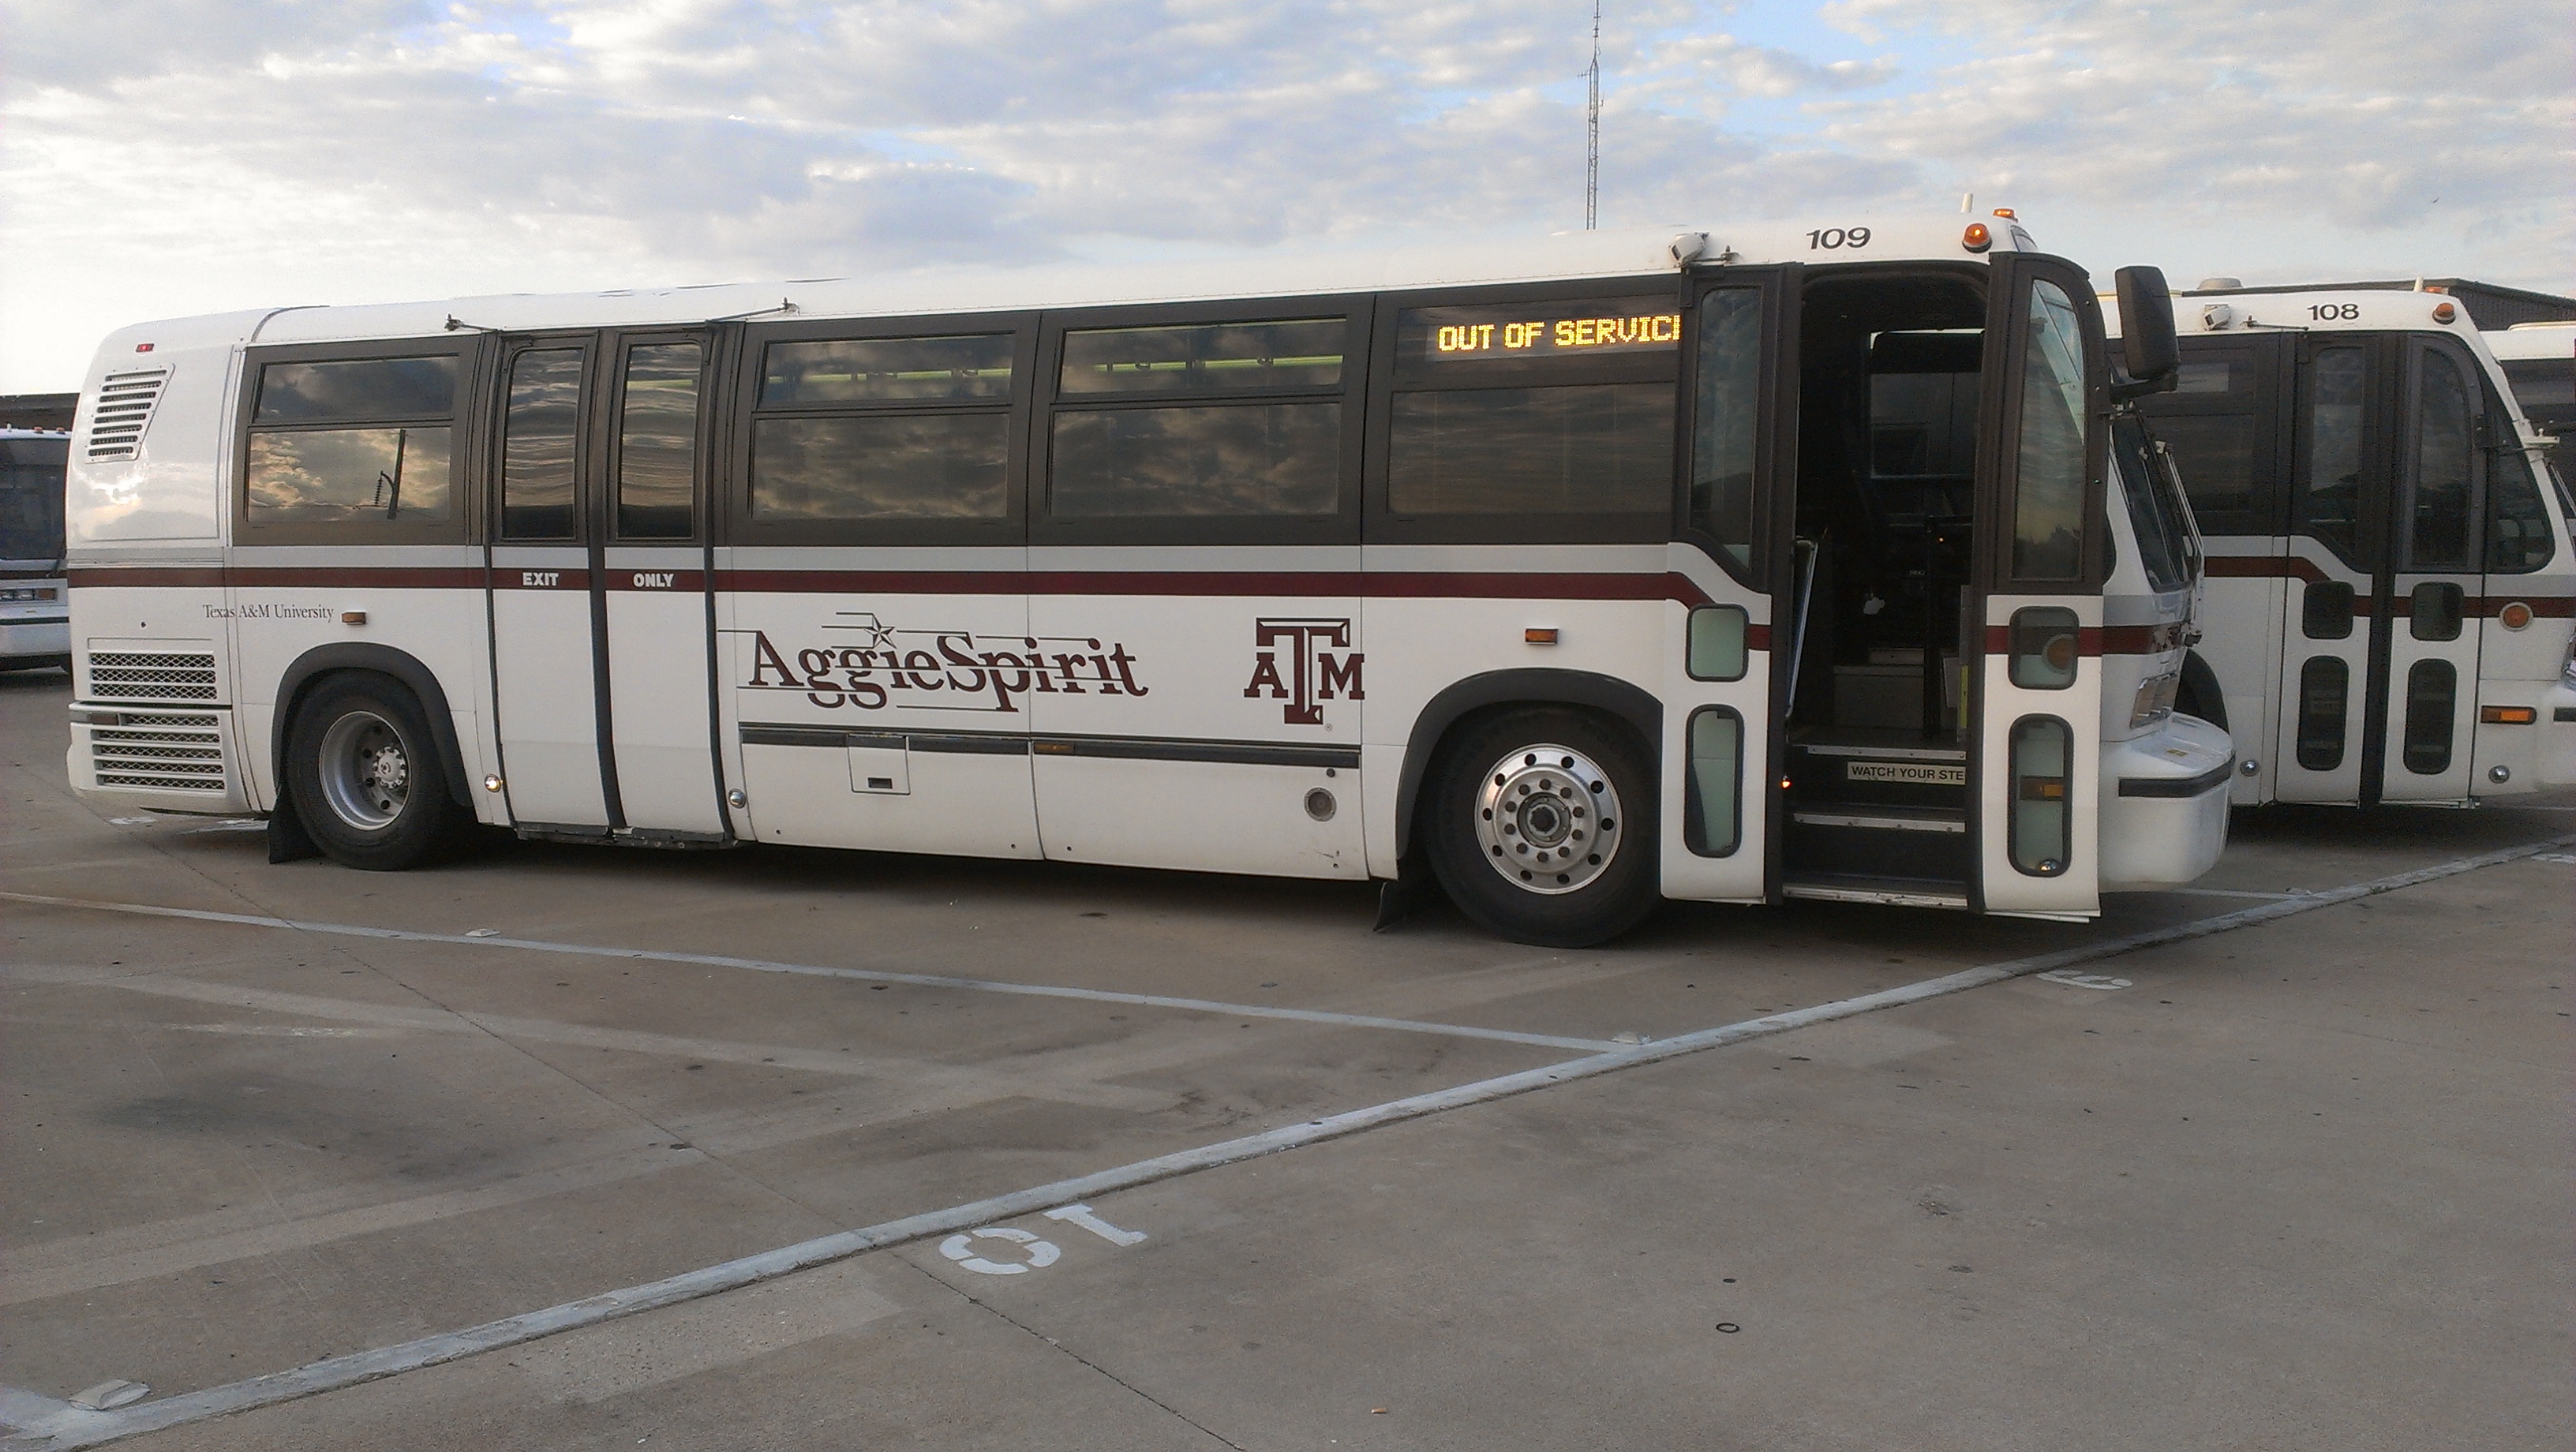 Texas A&M AggieSpirit bus 109, taken in 2012 before my shift.